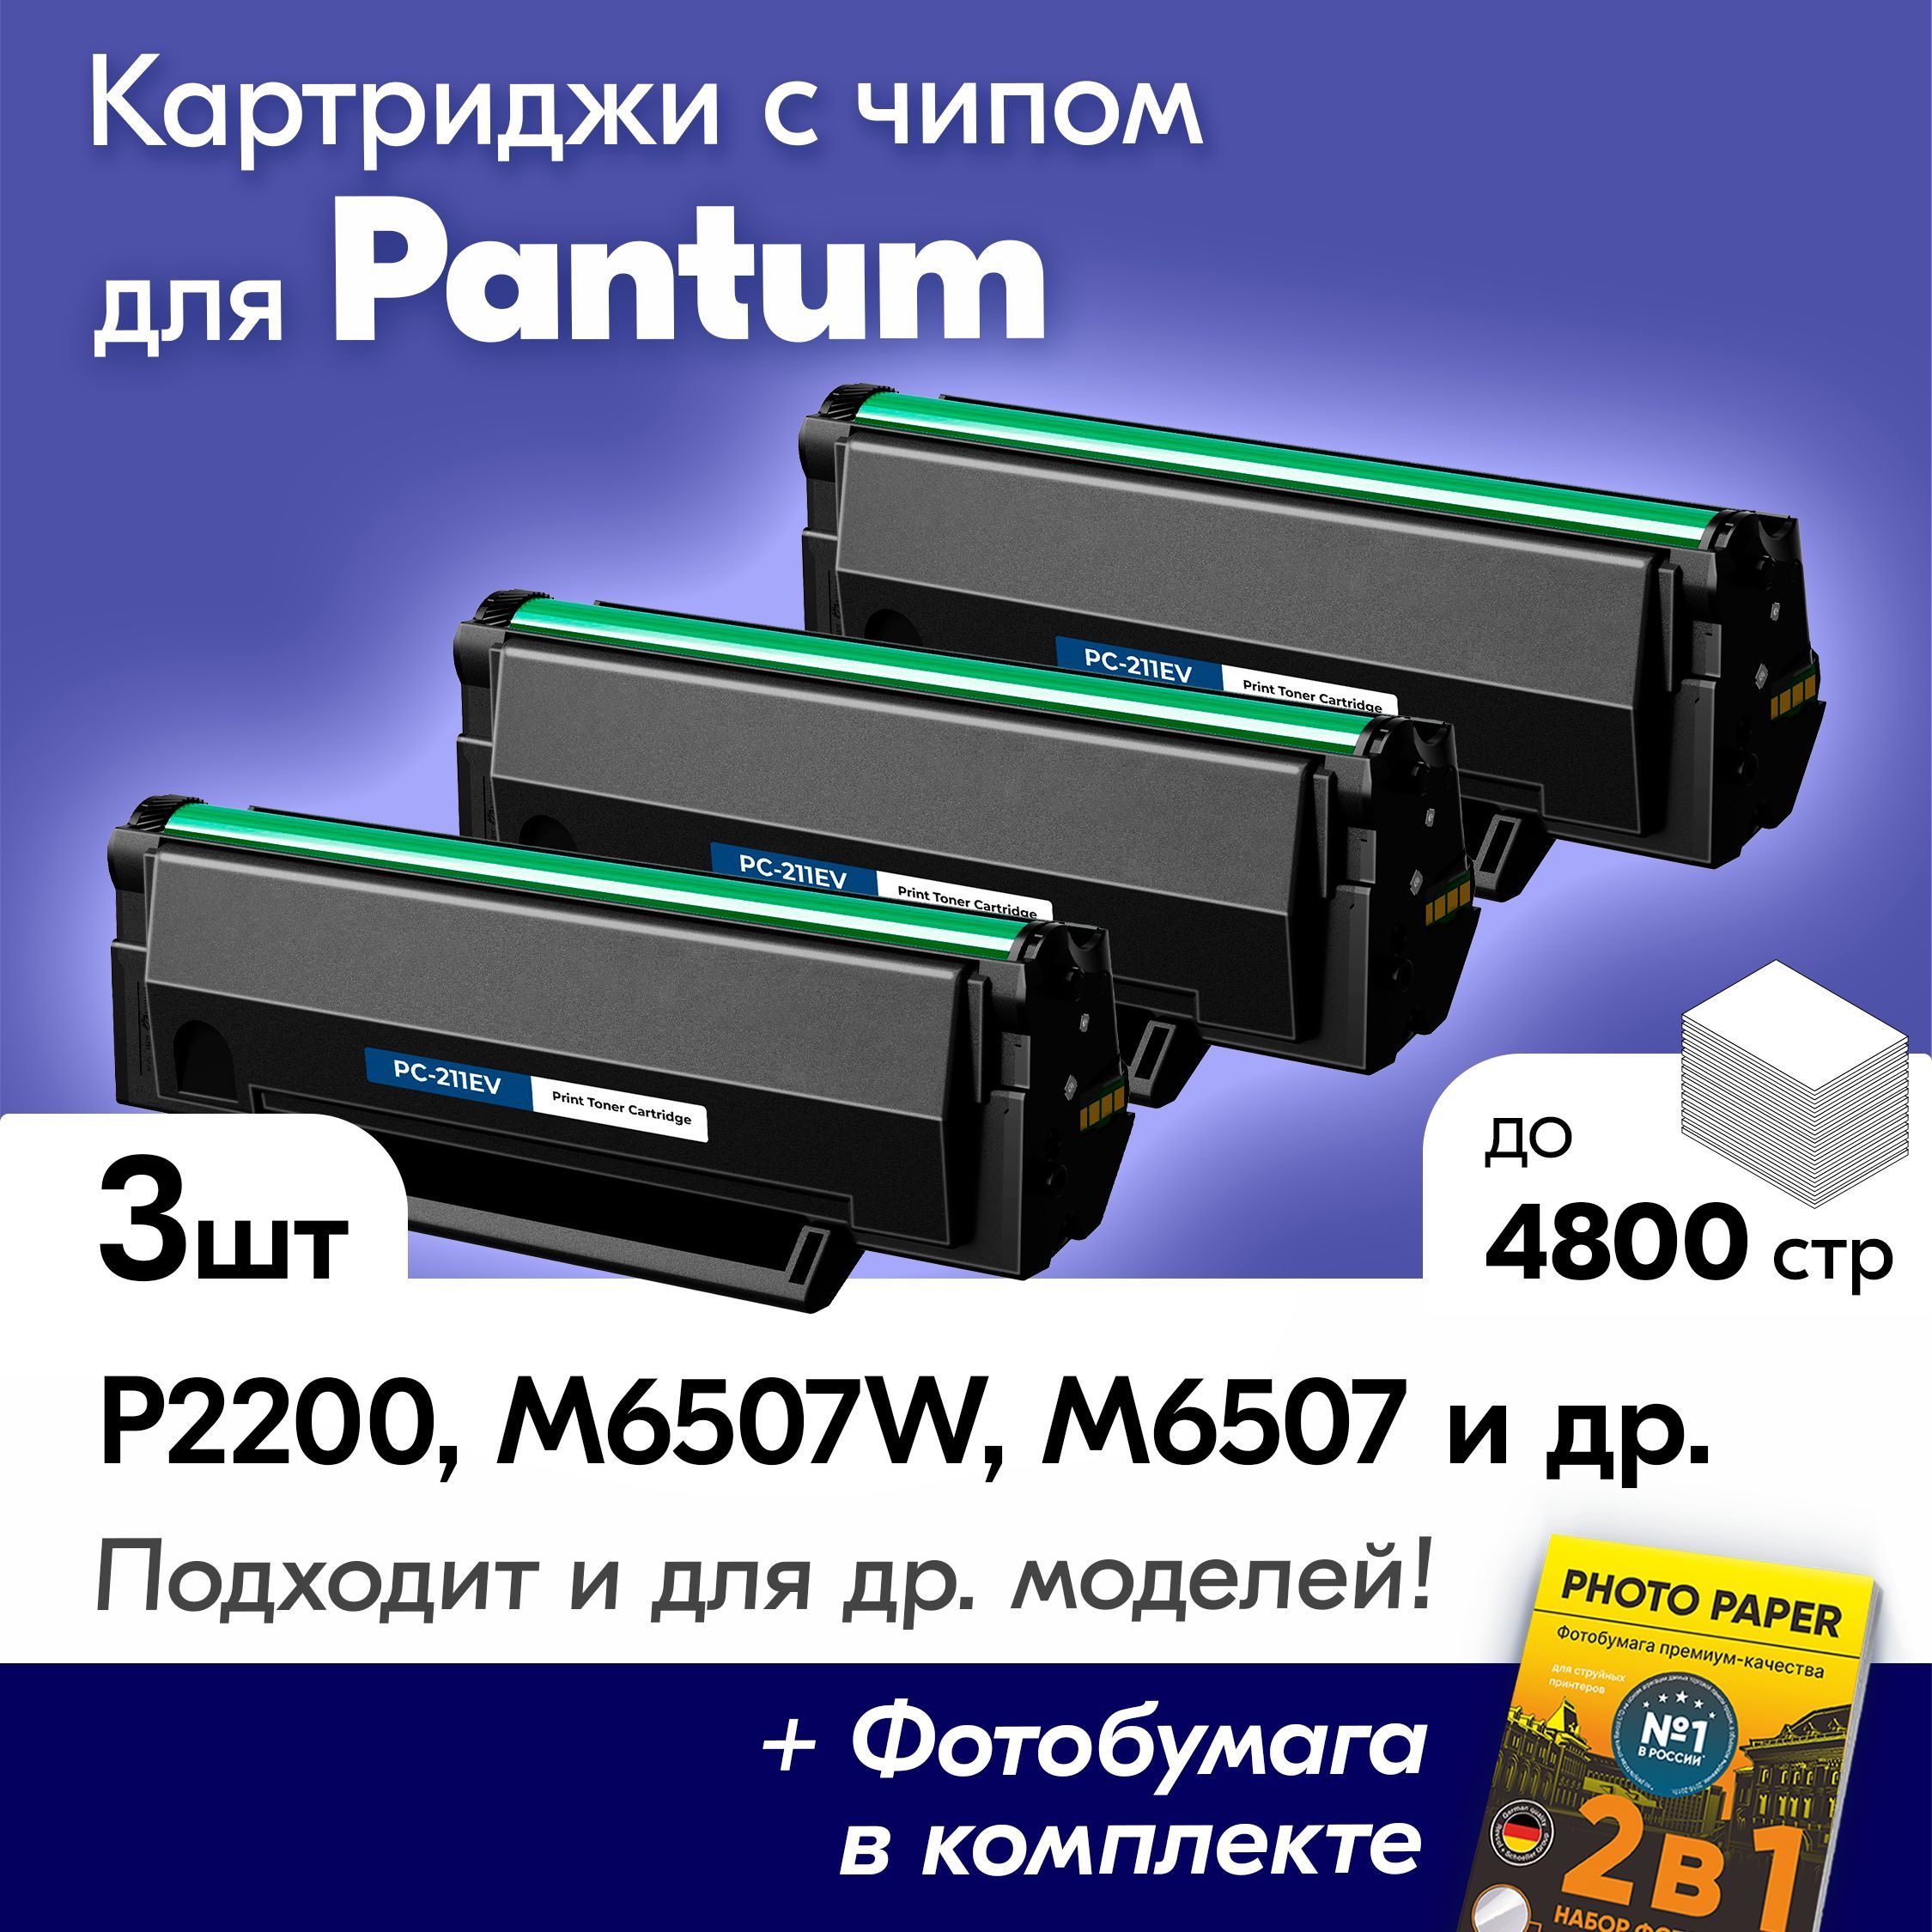 Pantum PC-211. Pantum p2502. Принтер лазерный Pantum p2502. Pantum p2207 драйвер. Pantum m6507w отзывы